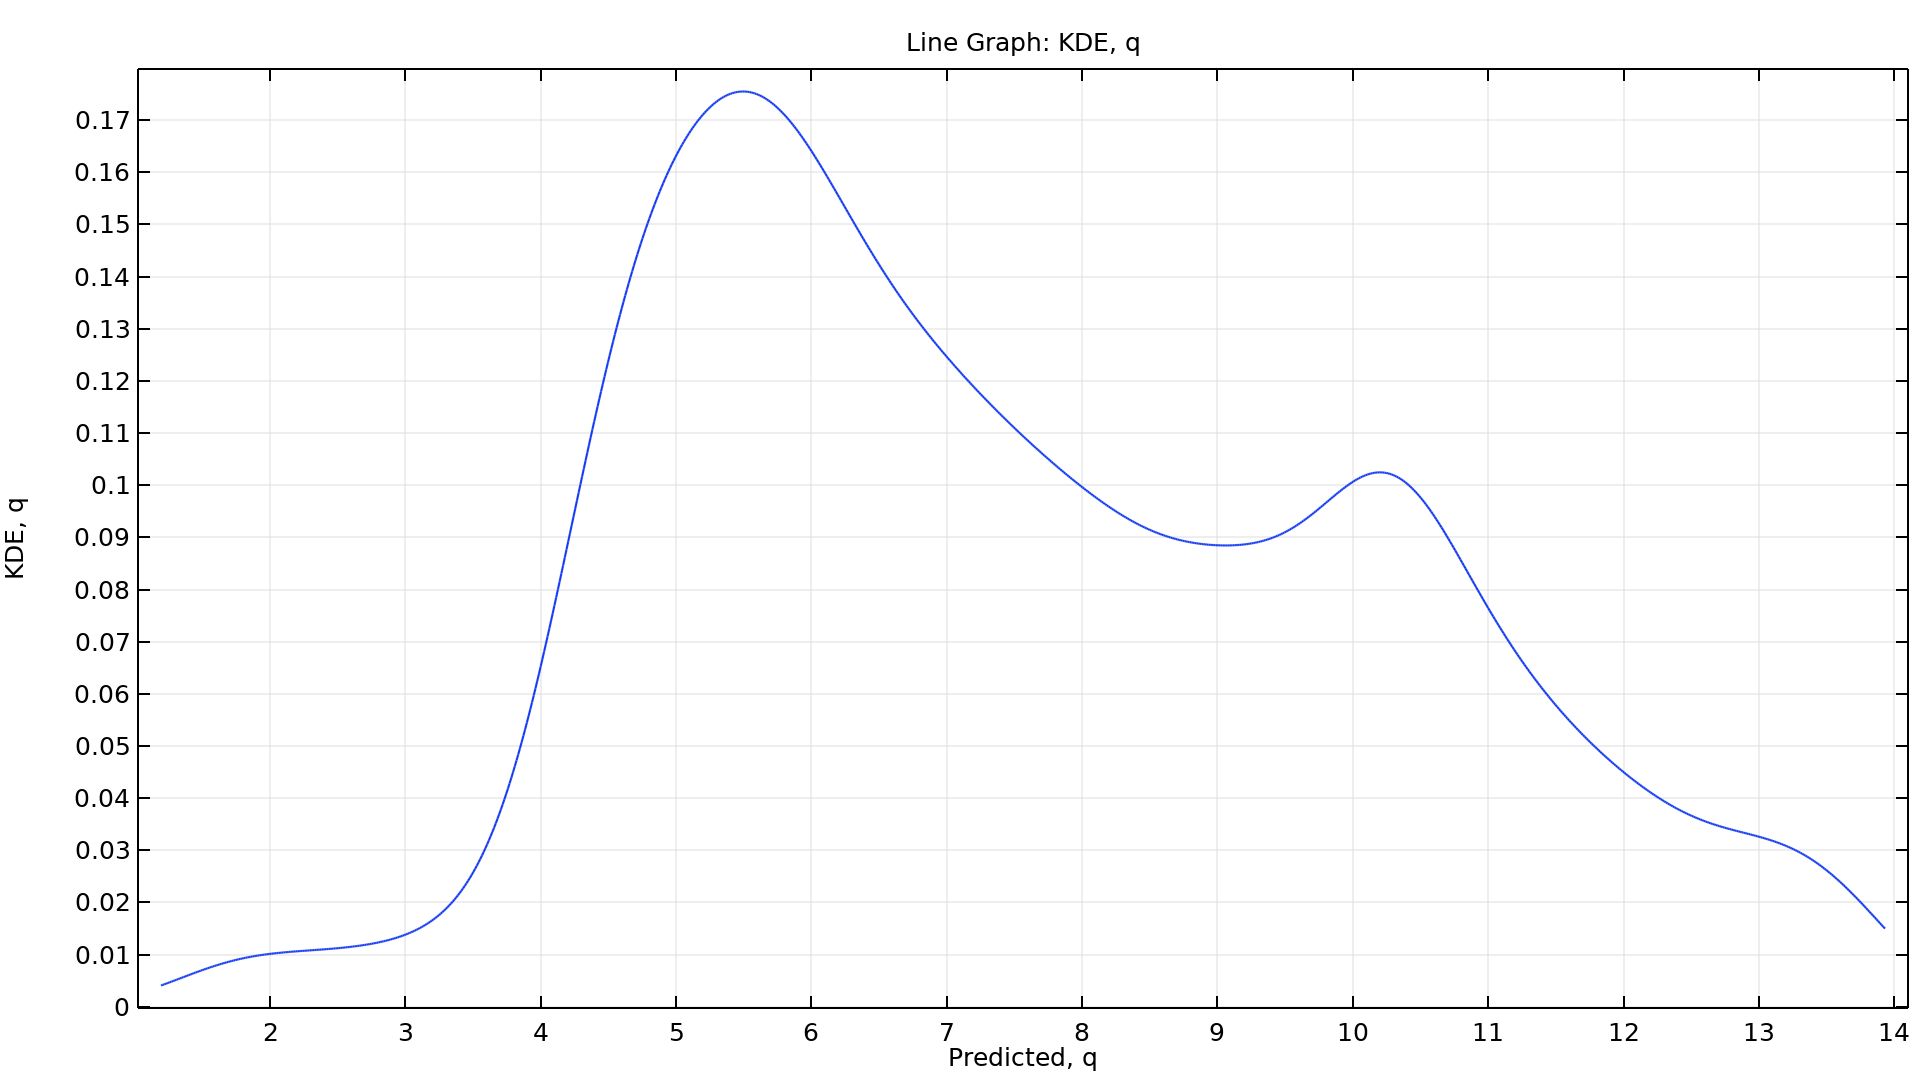 KDEをY軸, PredictedをX軸としたカーネル密度推定による折れ線グラフ.